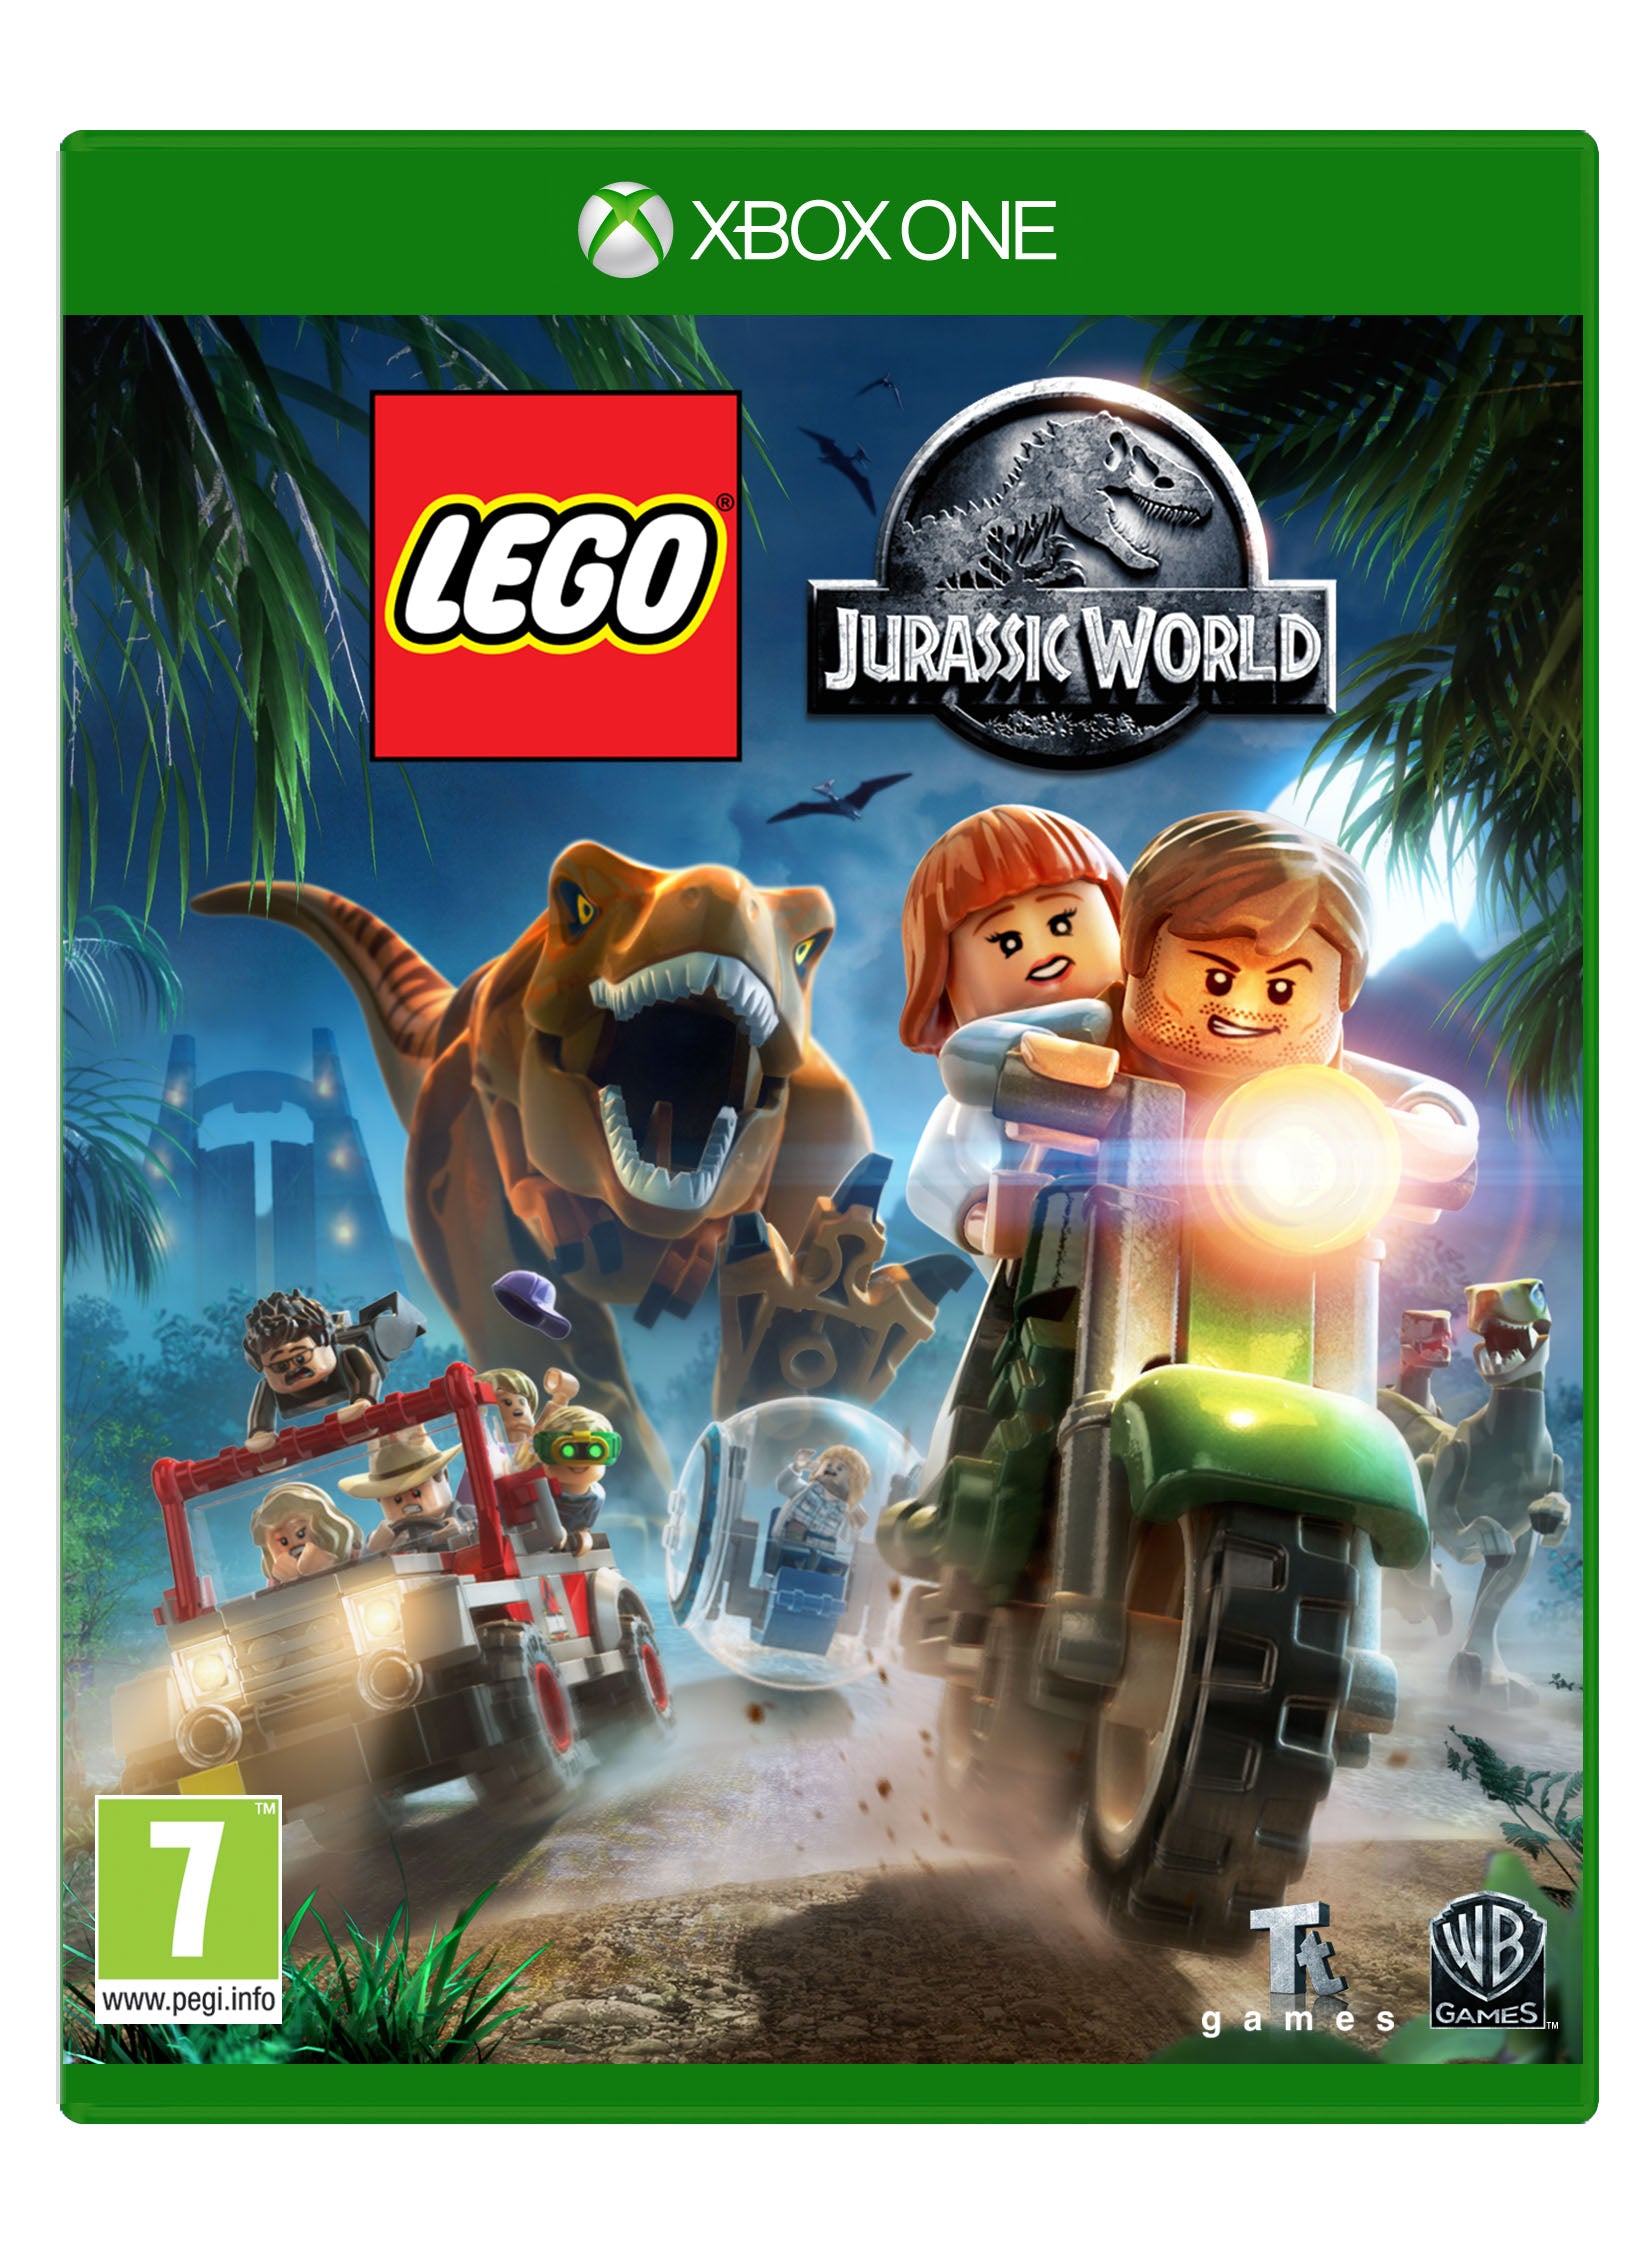 LEGO: Jurassic World – Xbox One